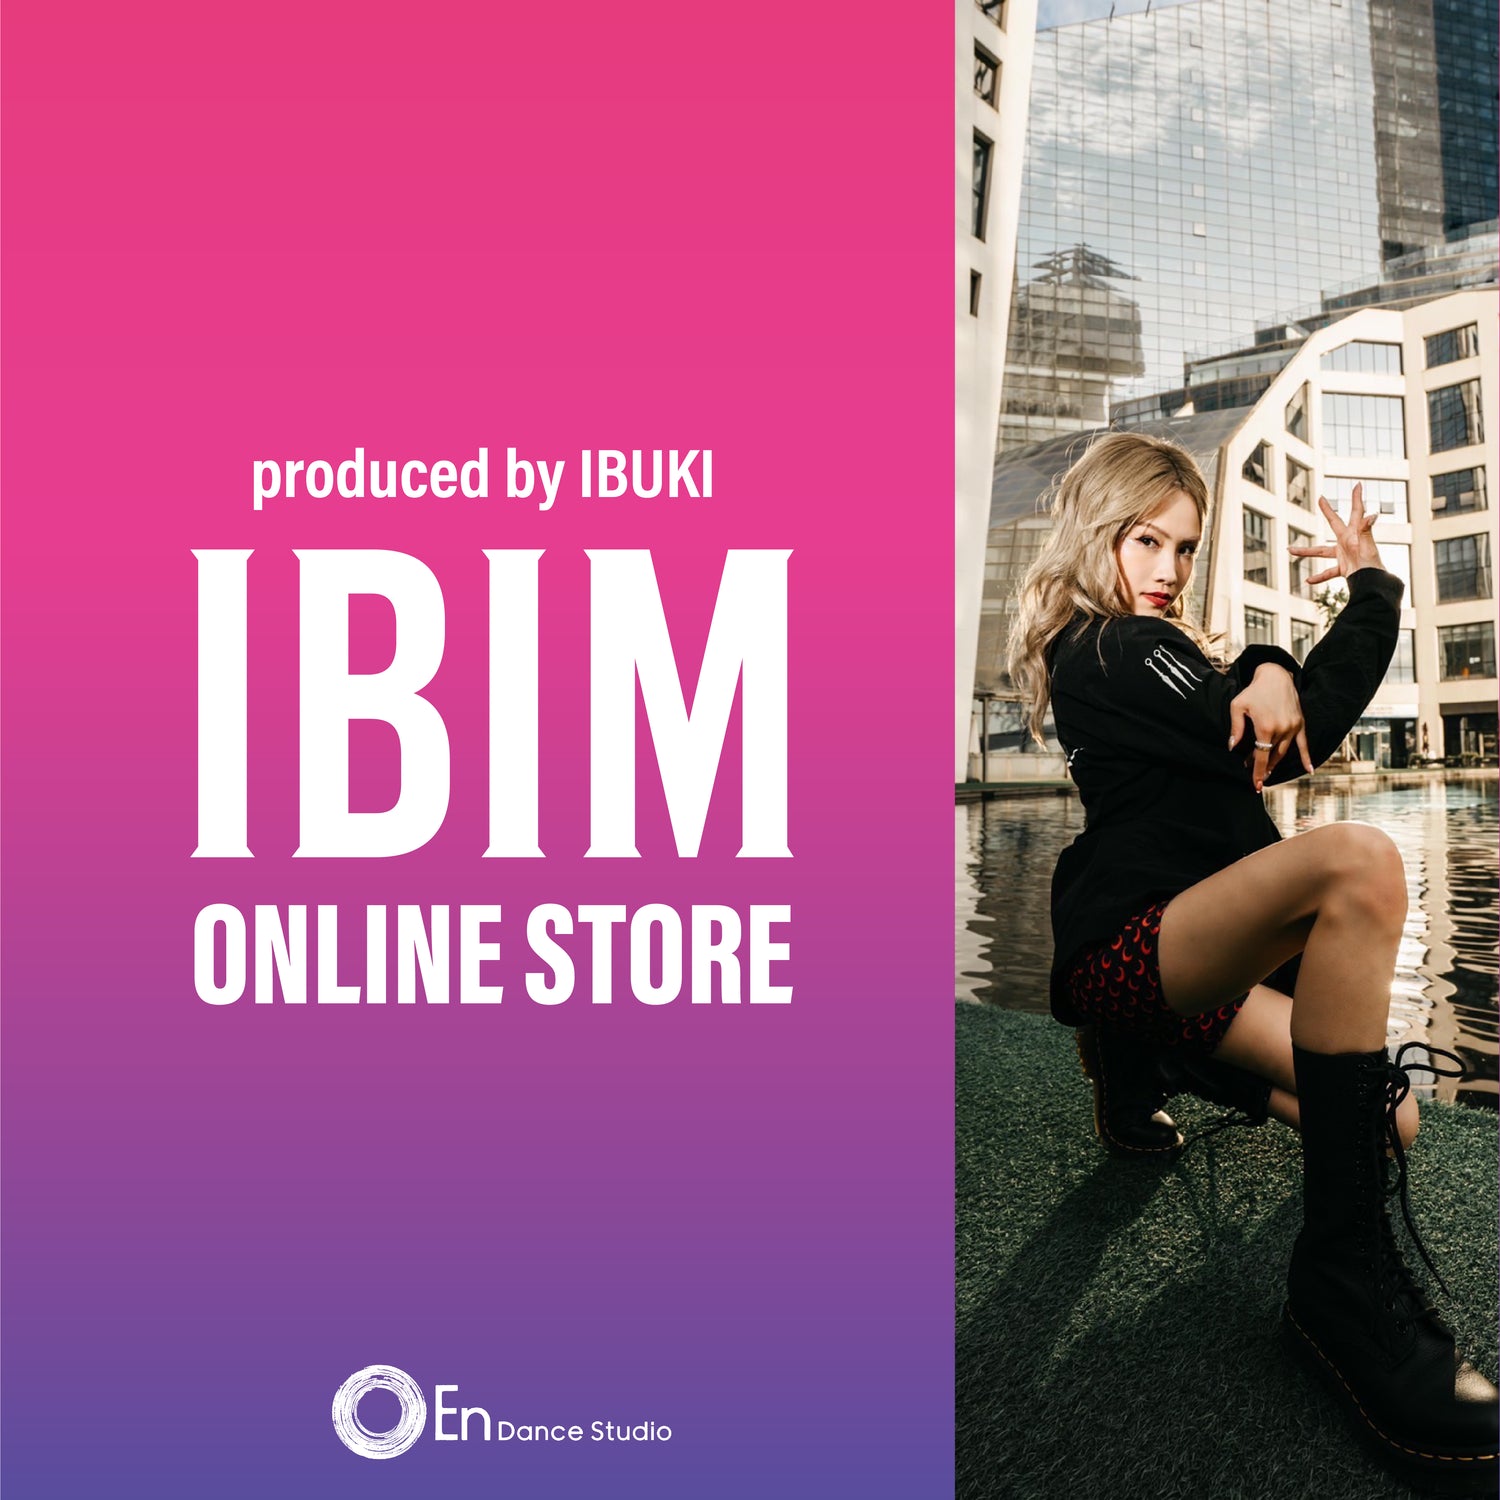 IBIM produced by IBUKI